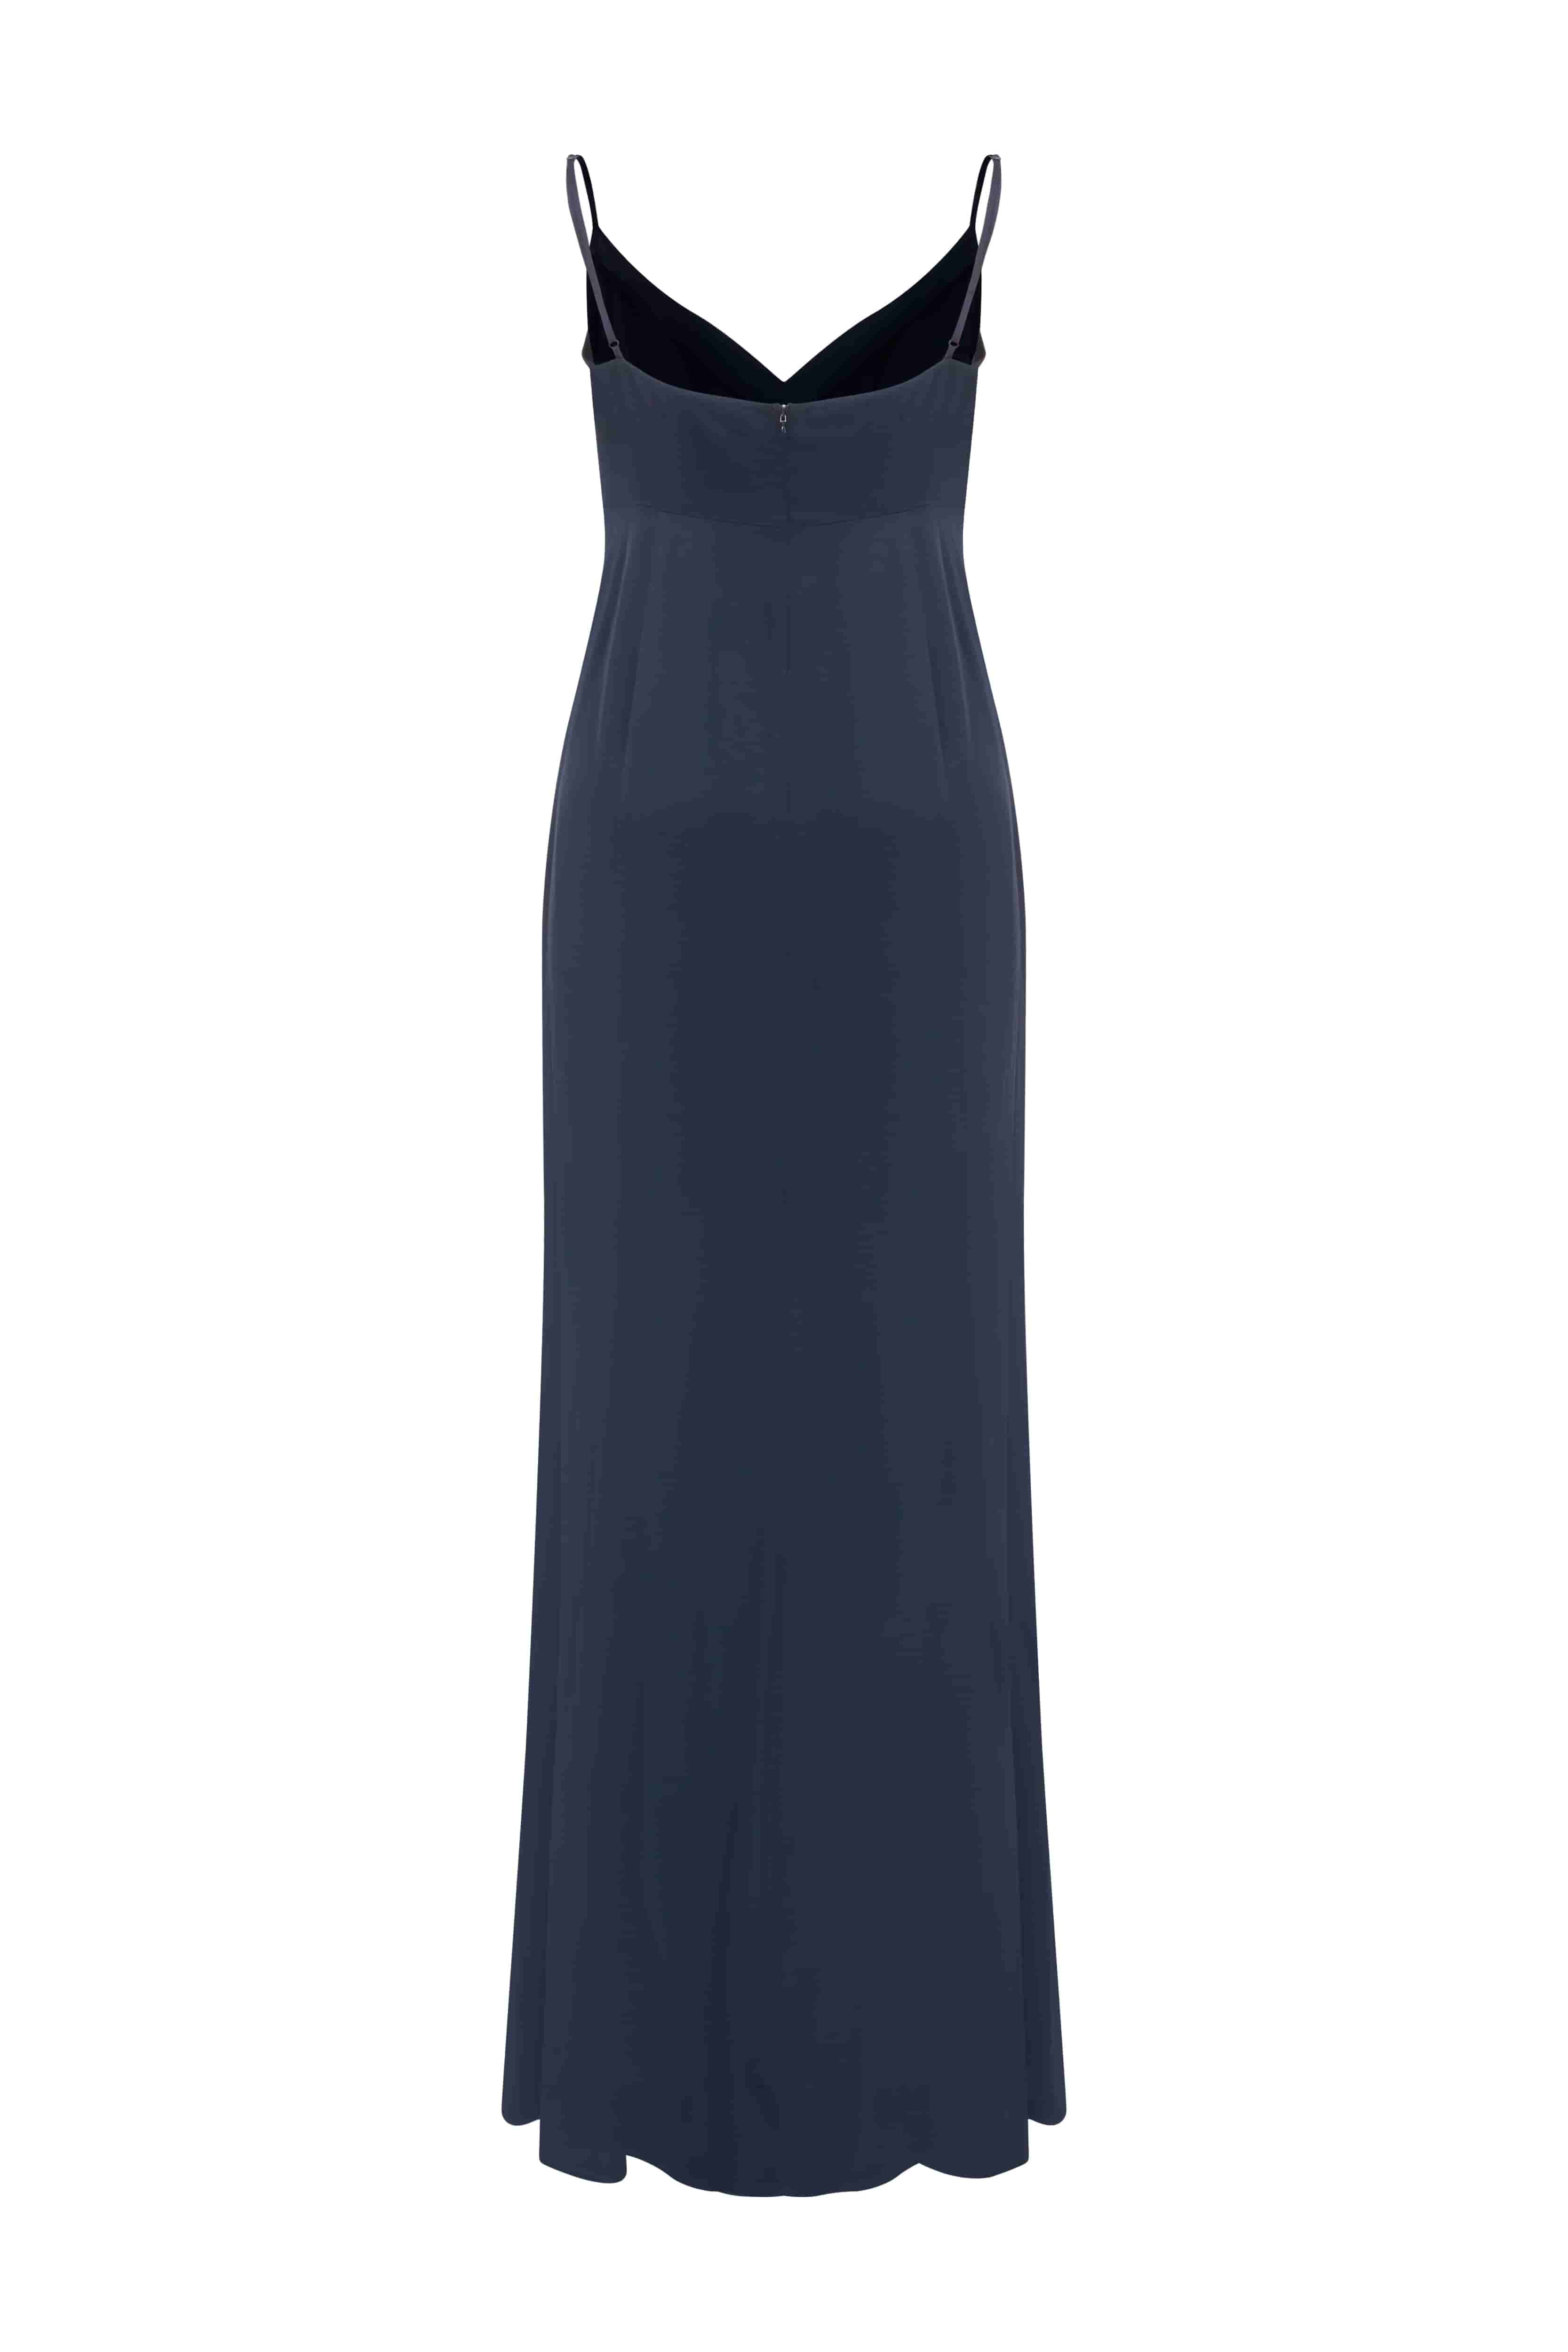 Navy Blue Evening Dress With Slits